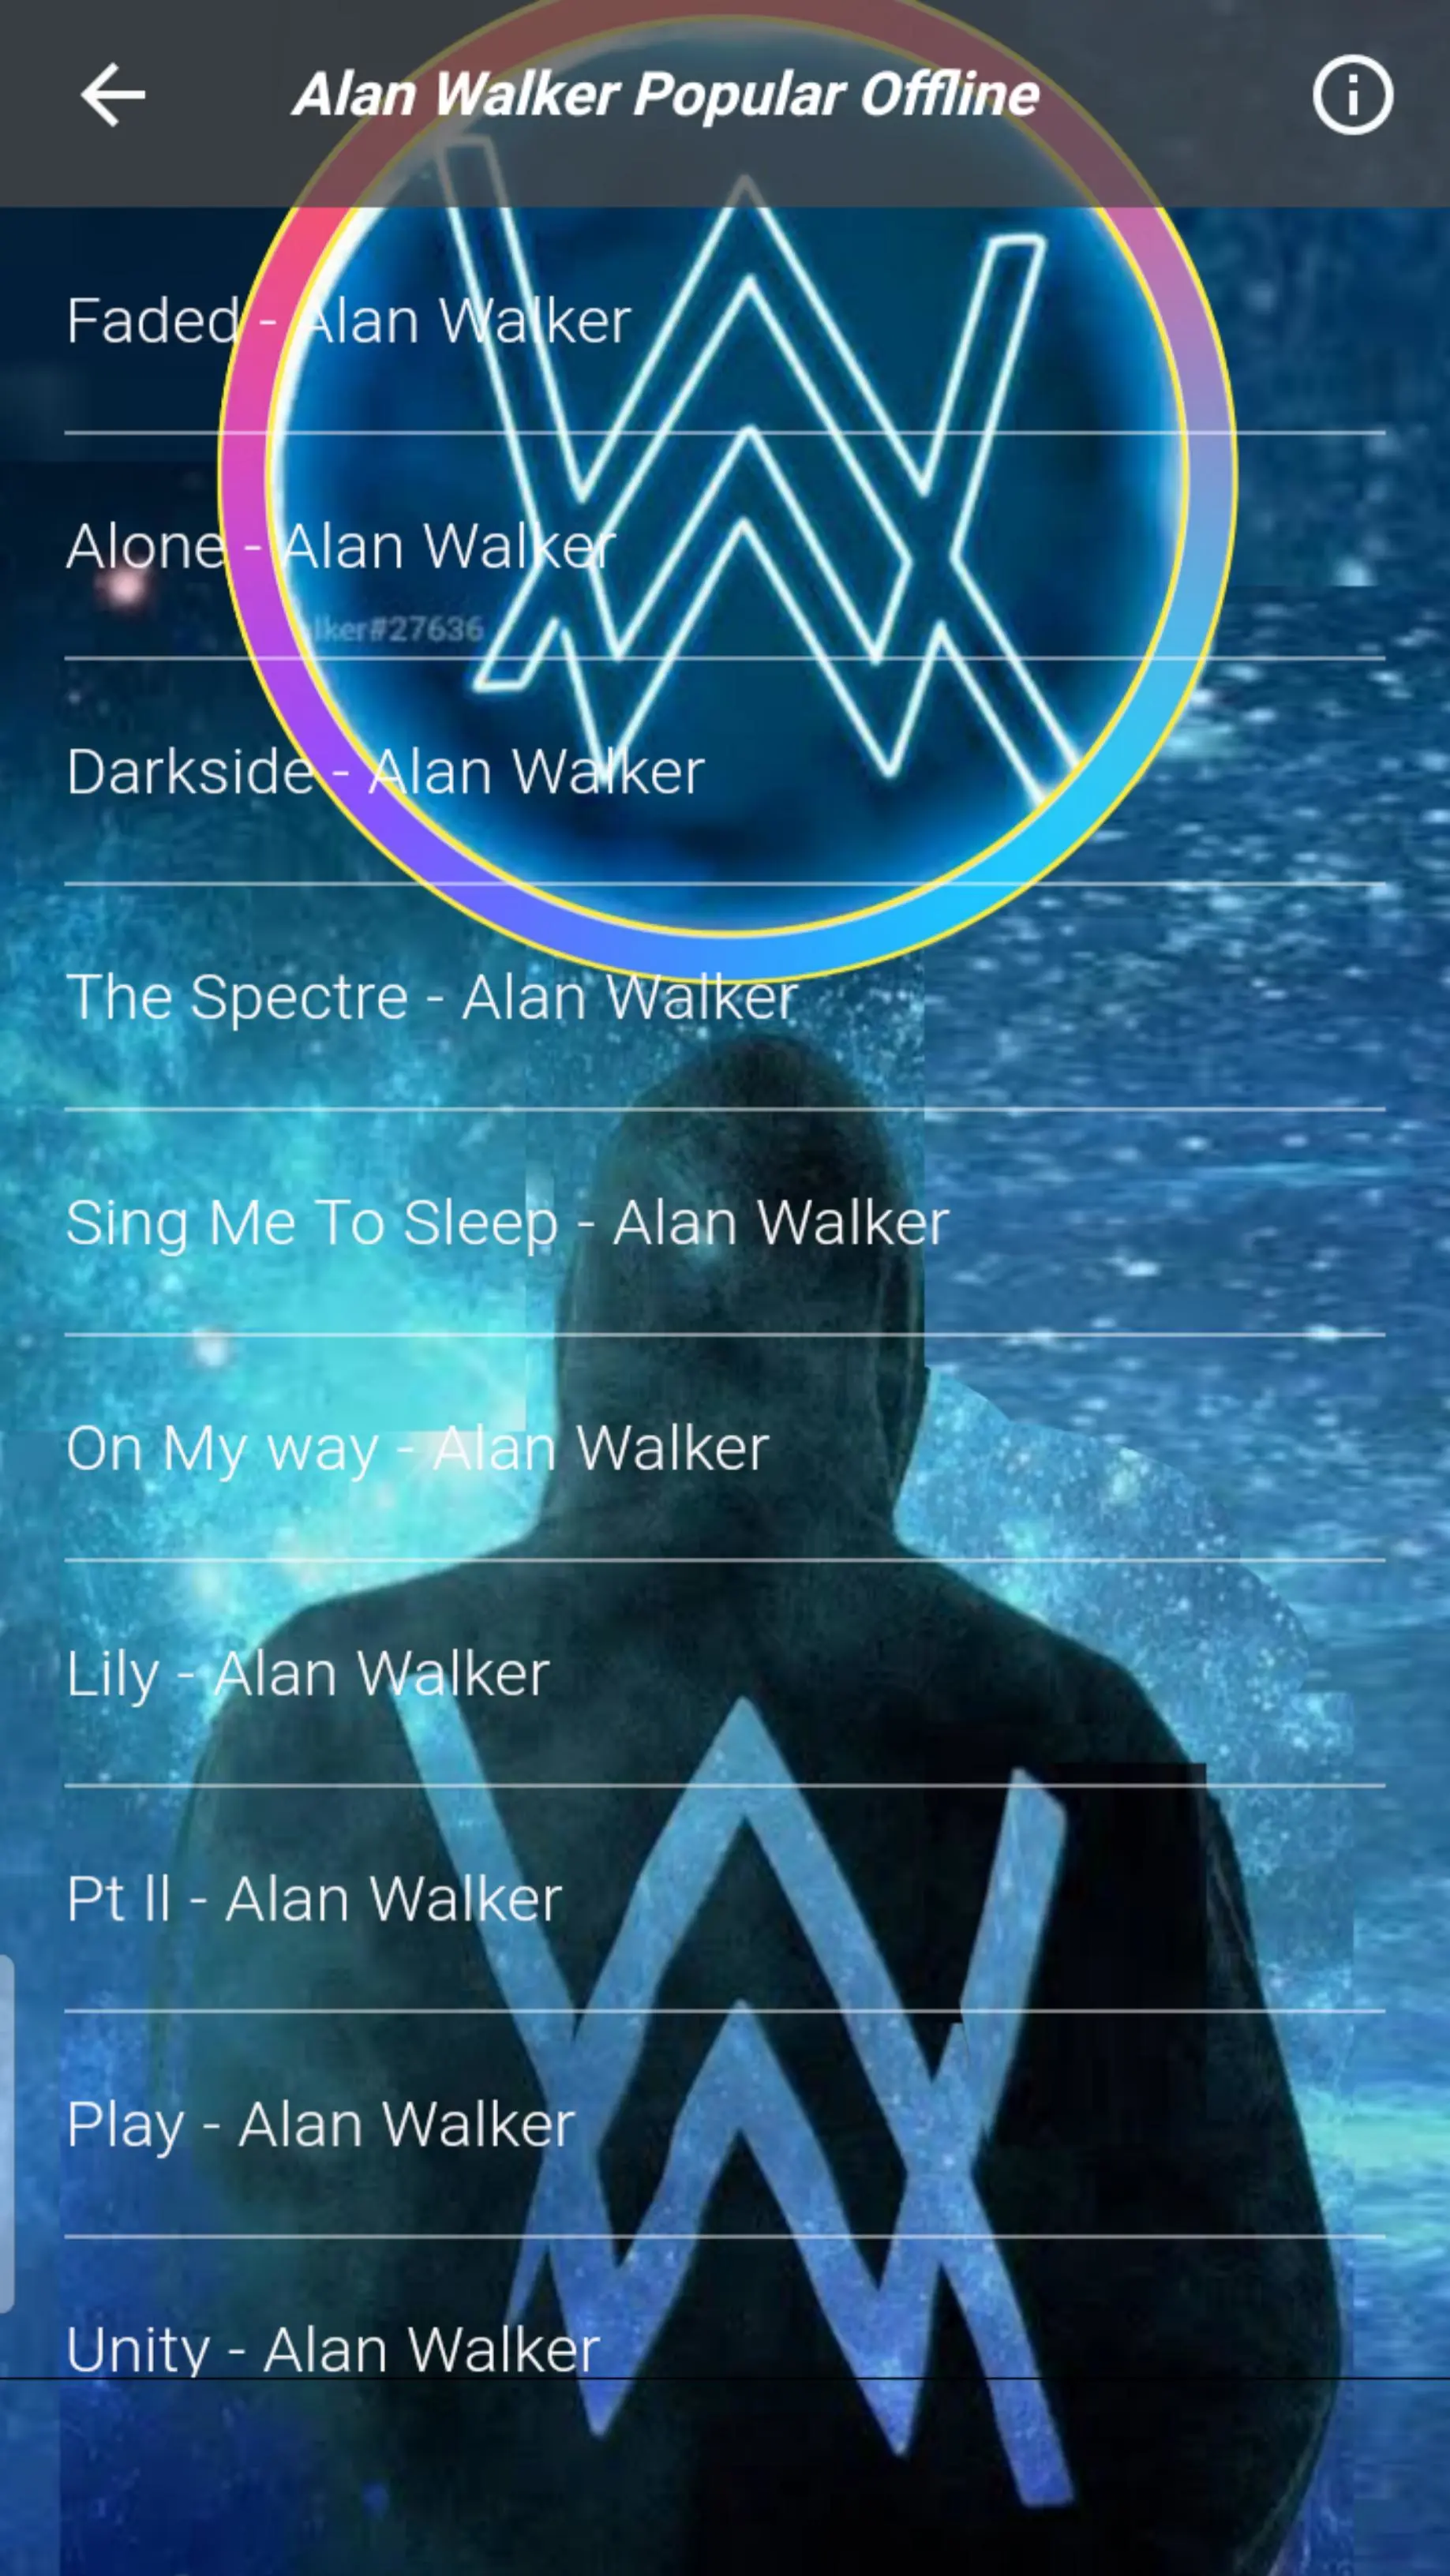 Descargar Walker Latest Song en PC | GameLoop Oficial